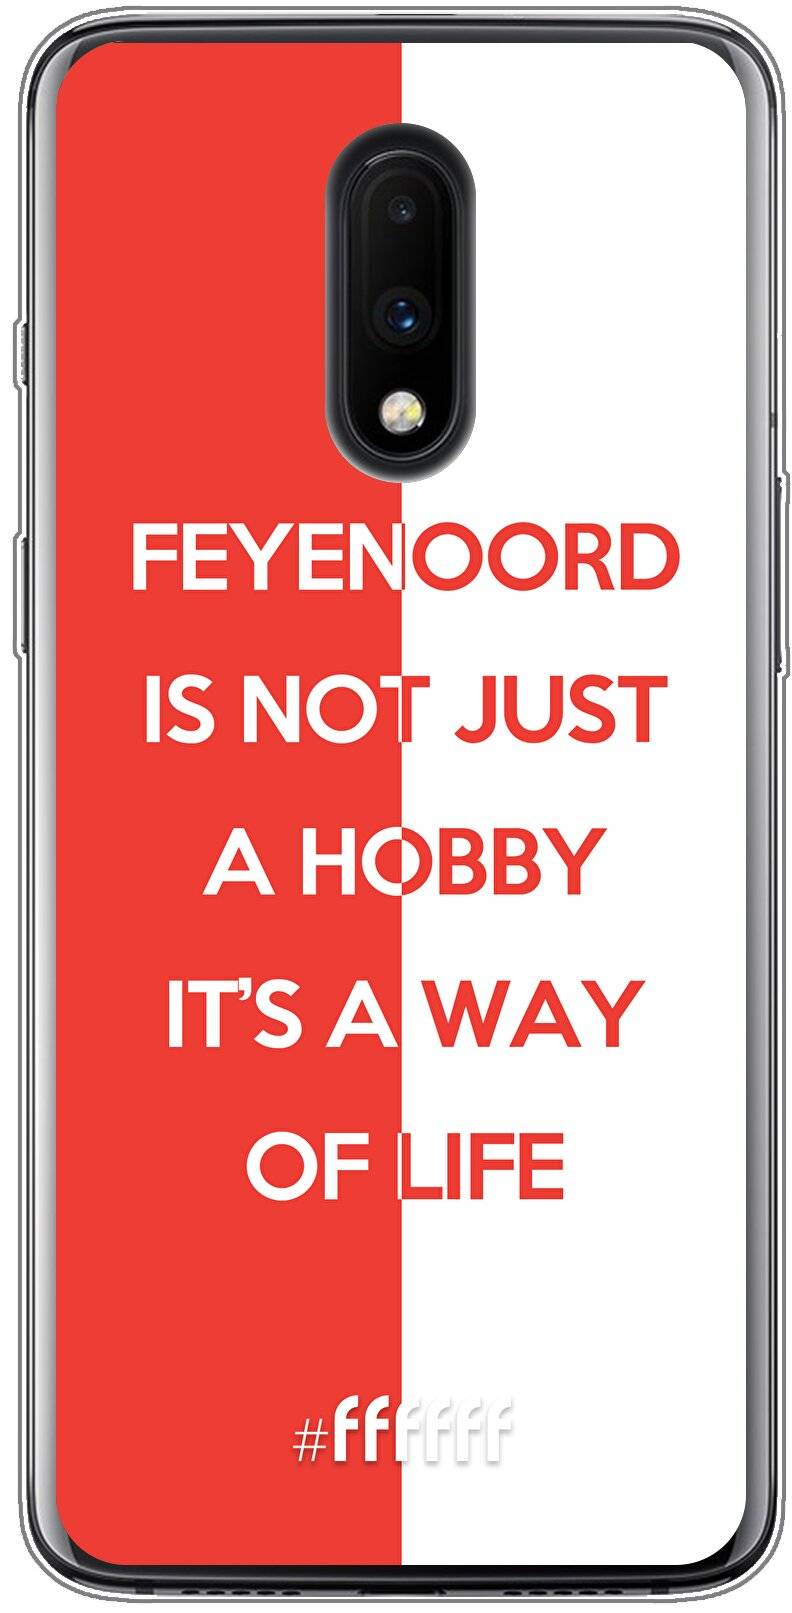 Feyenoord - Way of life 7